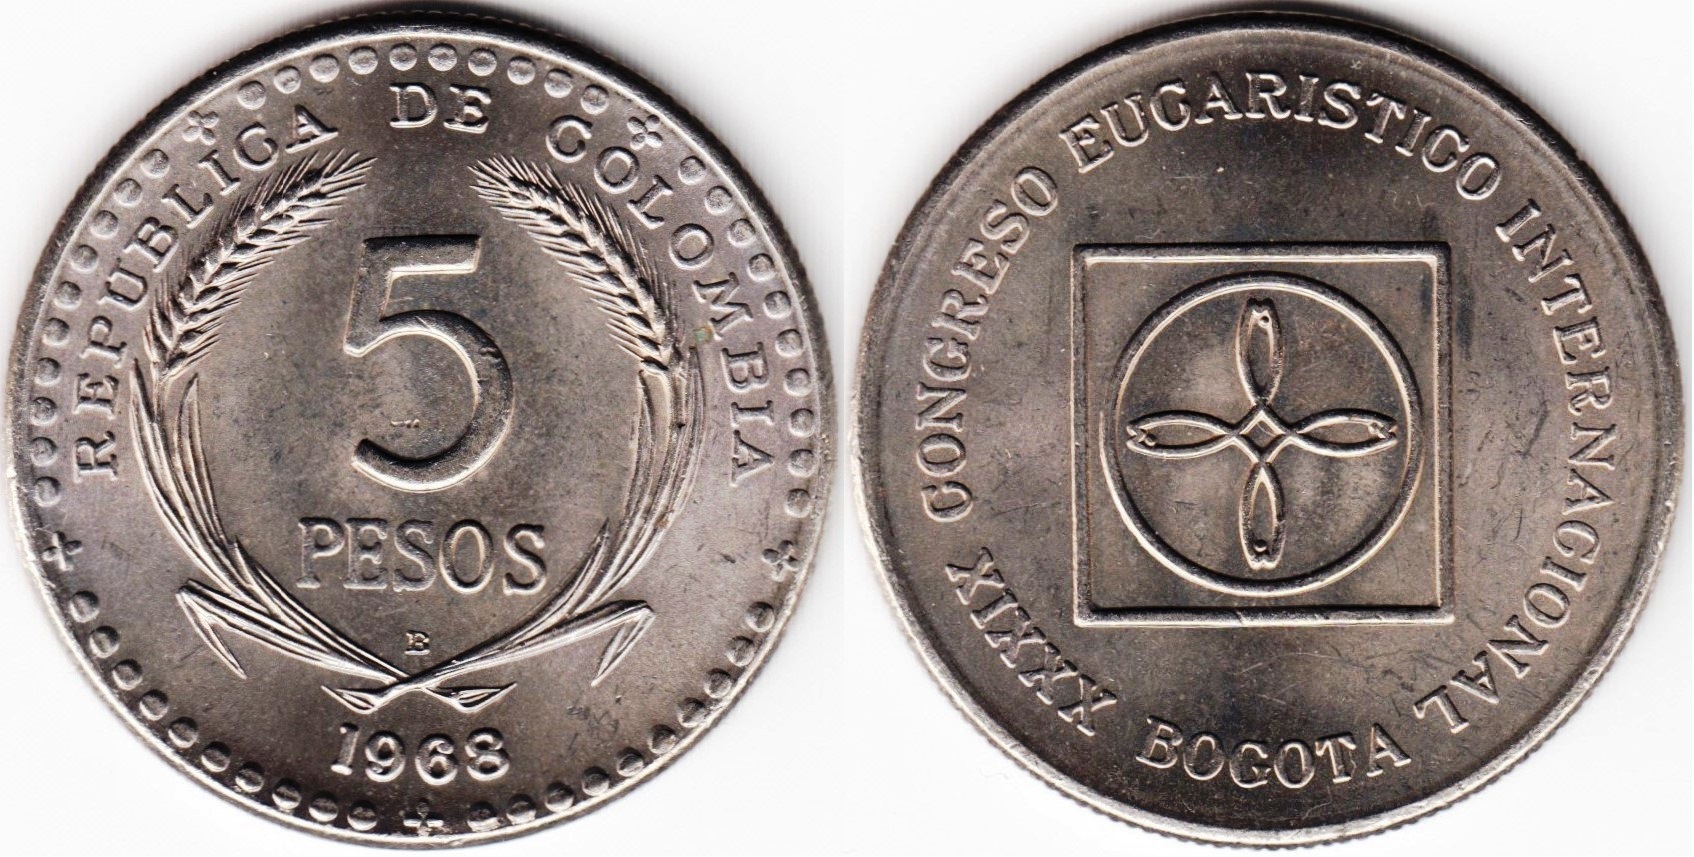 pesos-05-1968B-km230.jpg